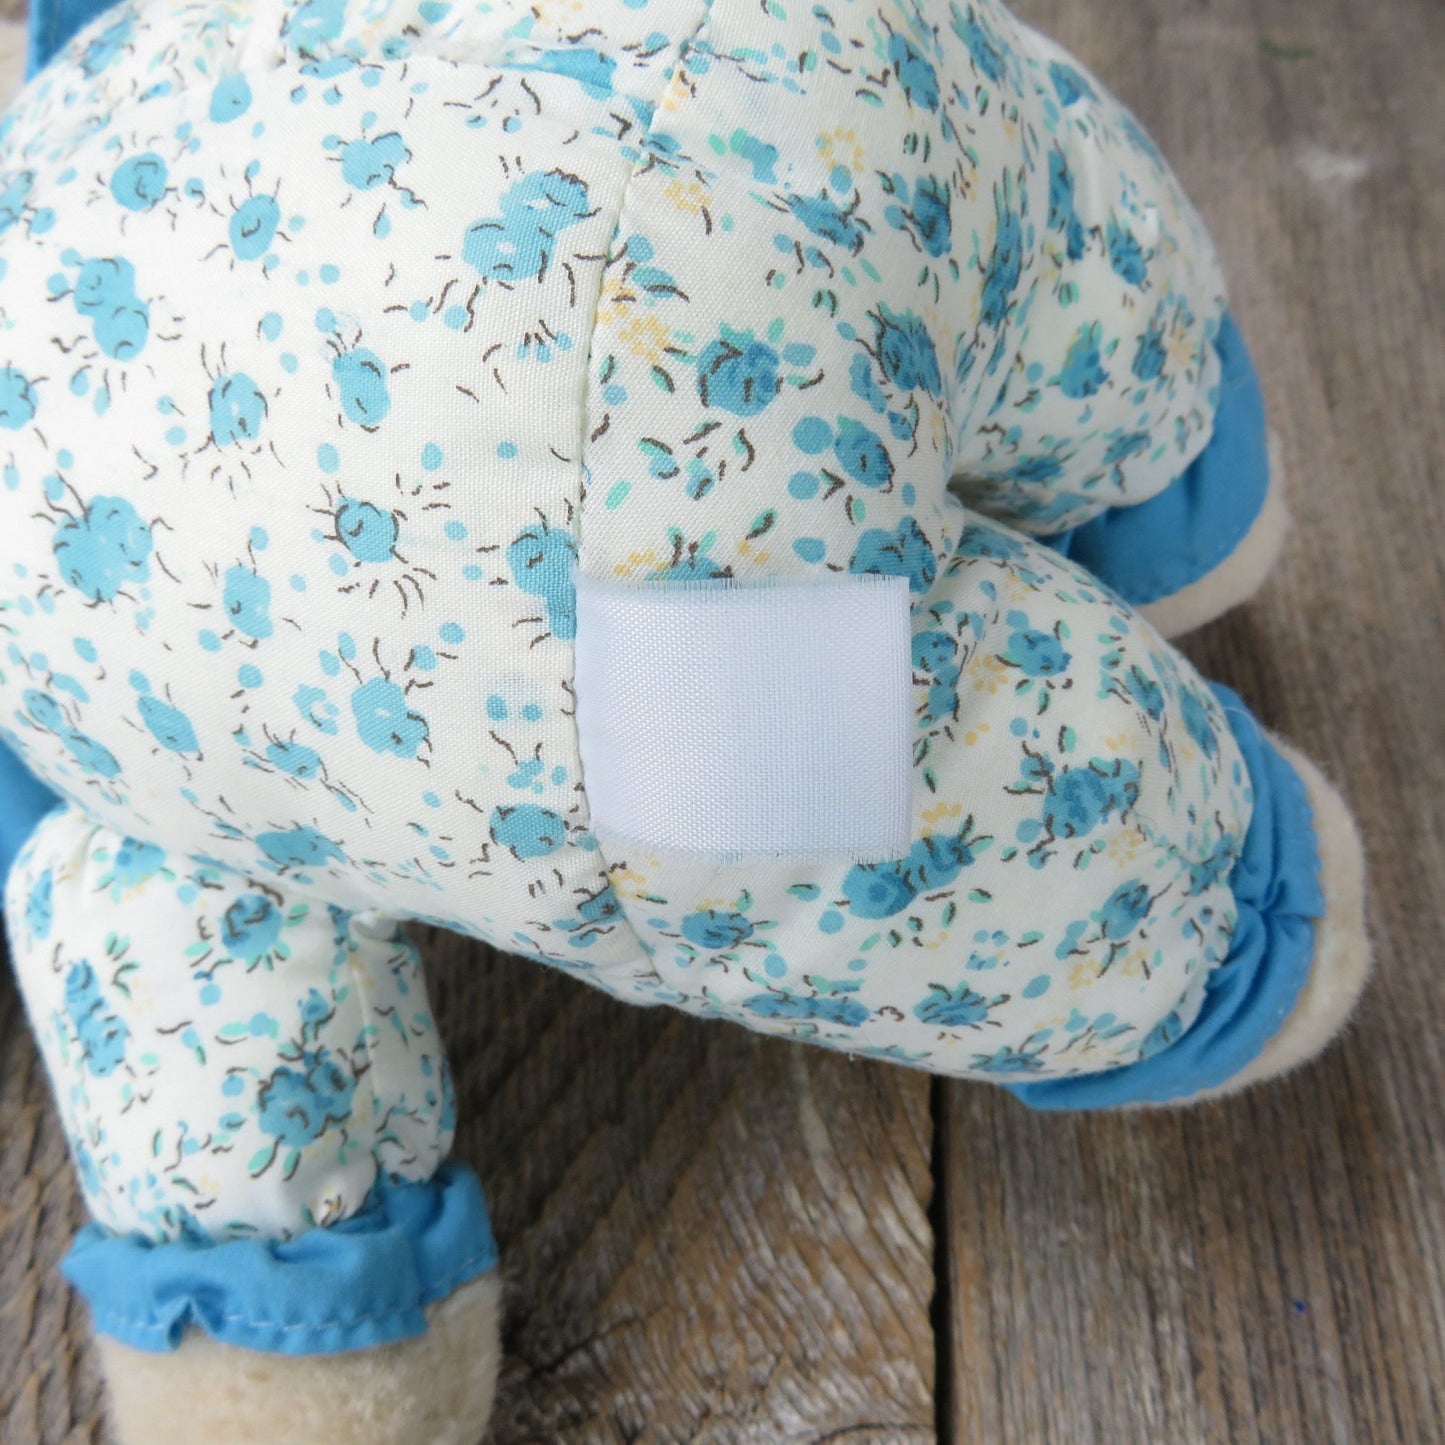 Teddy Bear Plush in Pajamas Tan Blue Flowers Nightcap Brown Plastic Nose Stuffed Animal